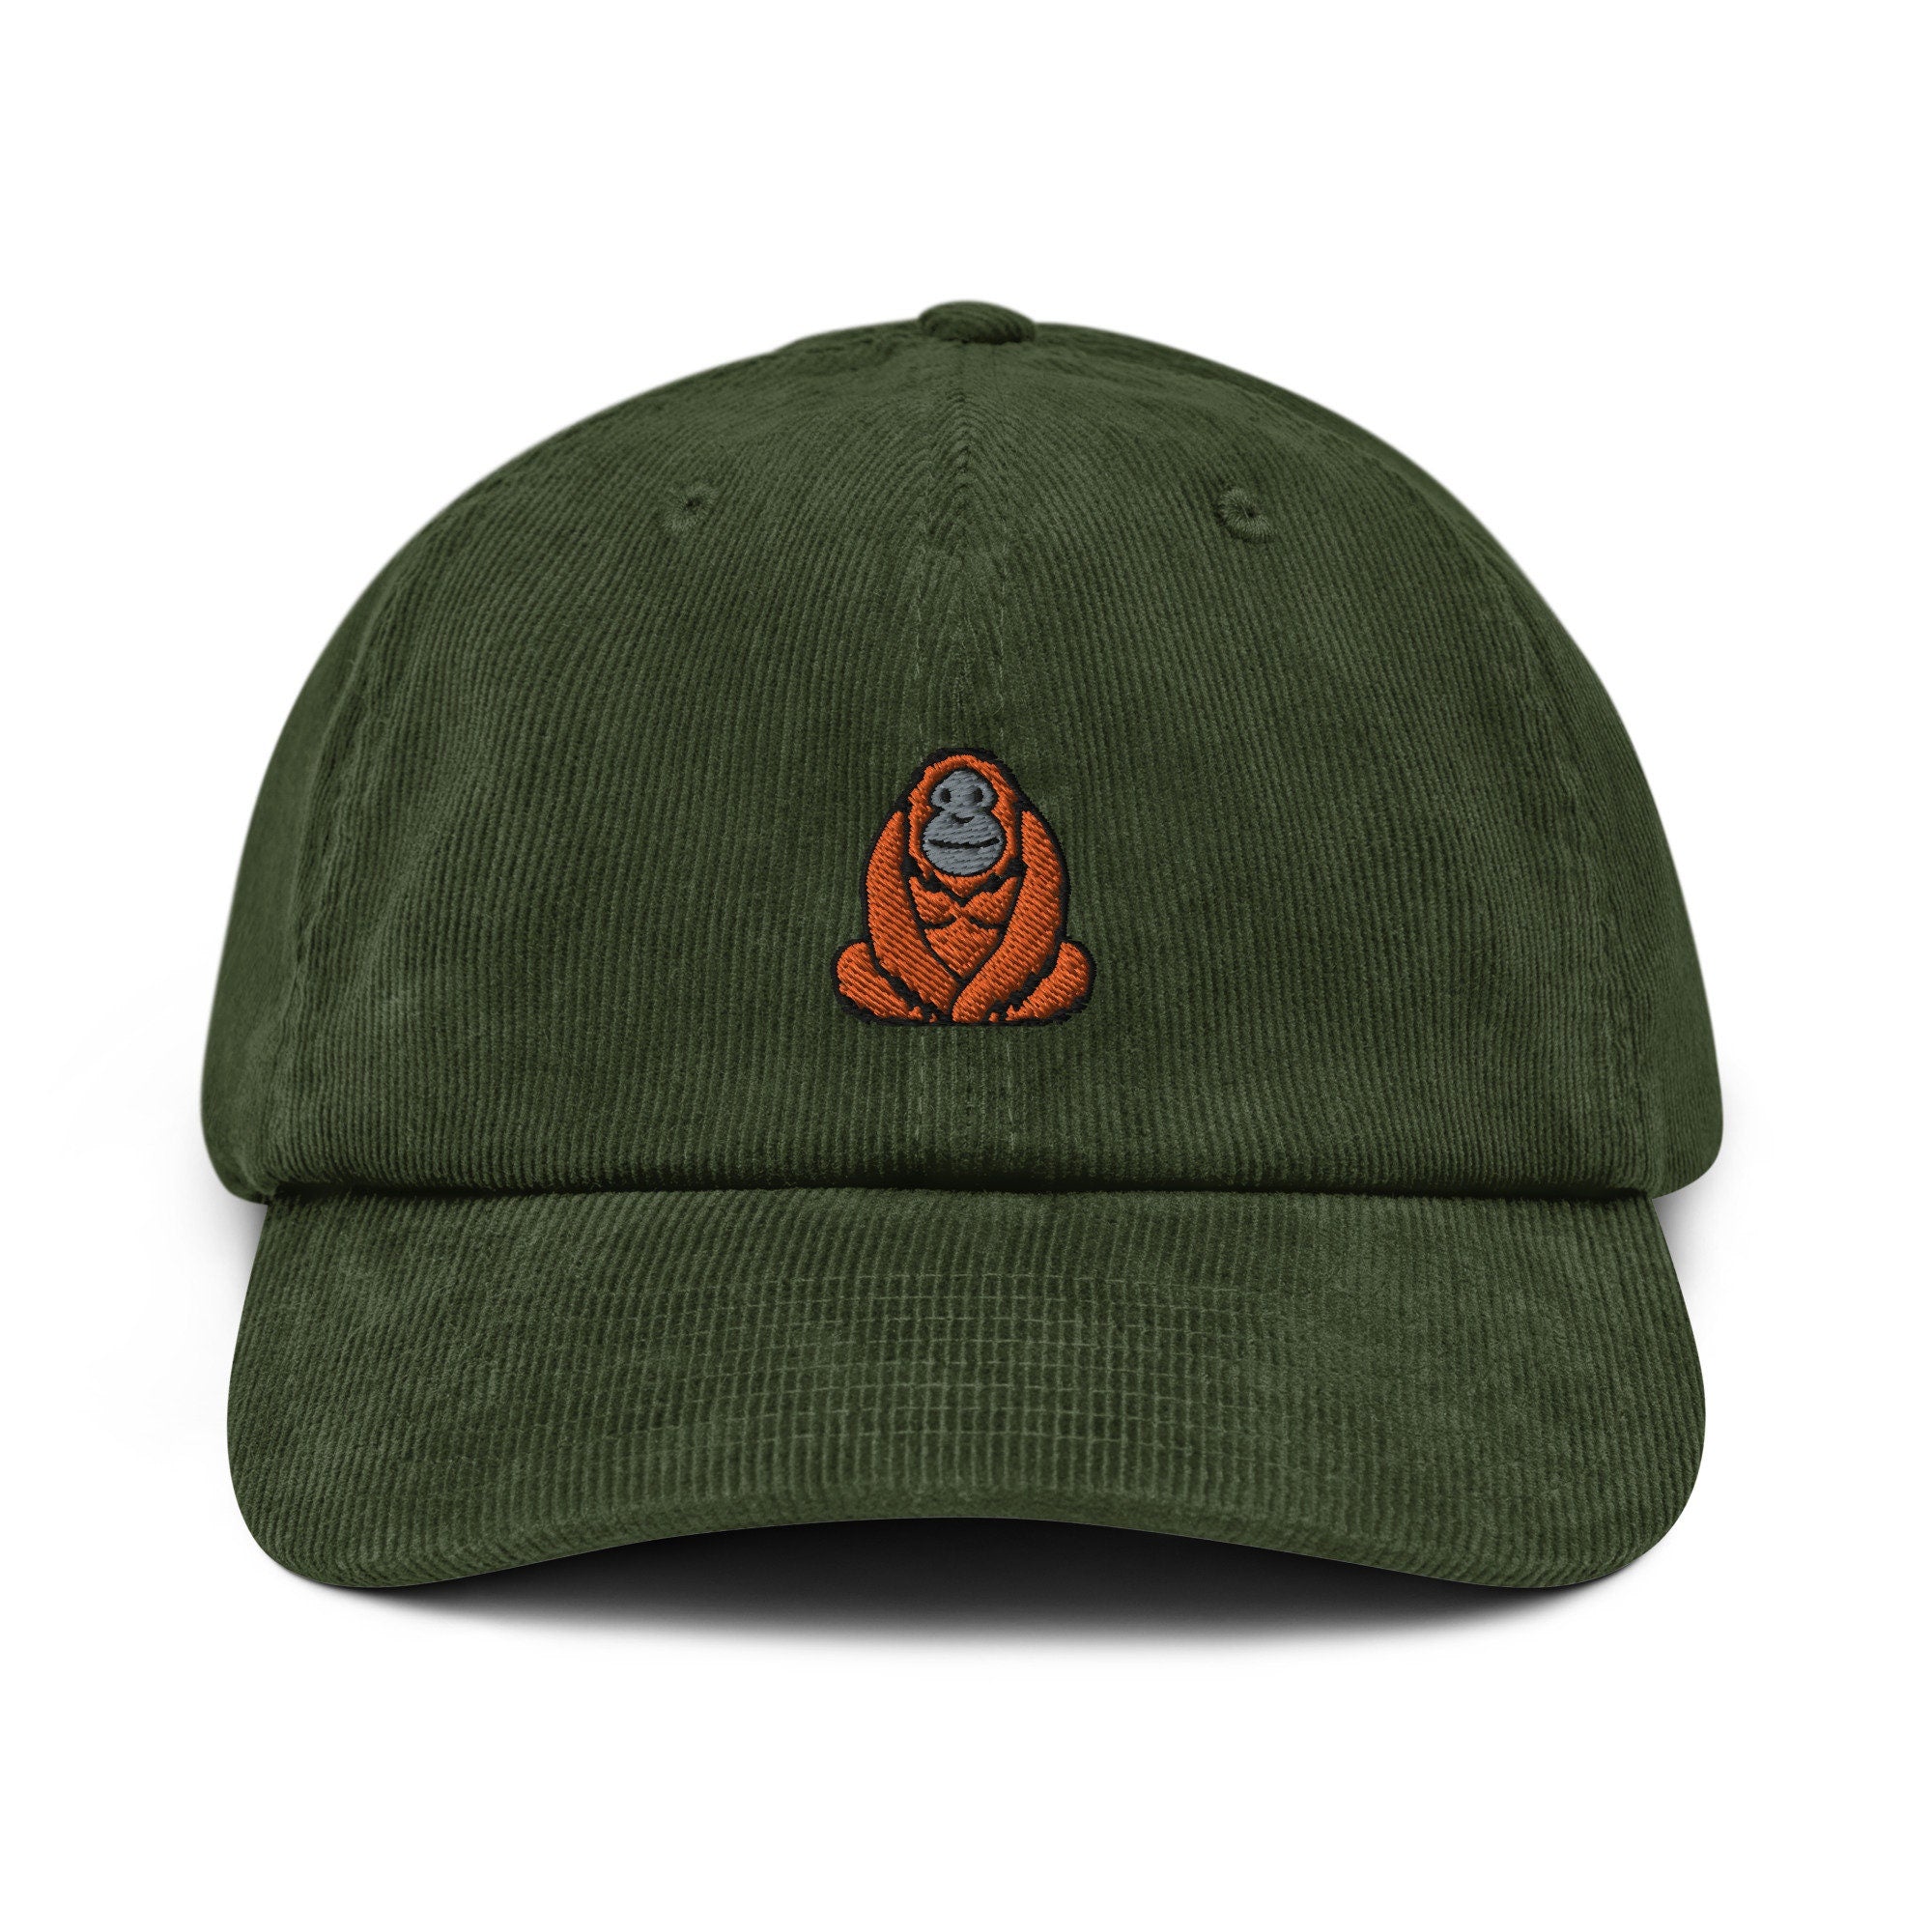 Orangutan Corduroy Hat, Handmade Embroidered Corduroy Dad Cap - Multiple Colors